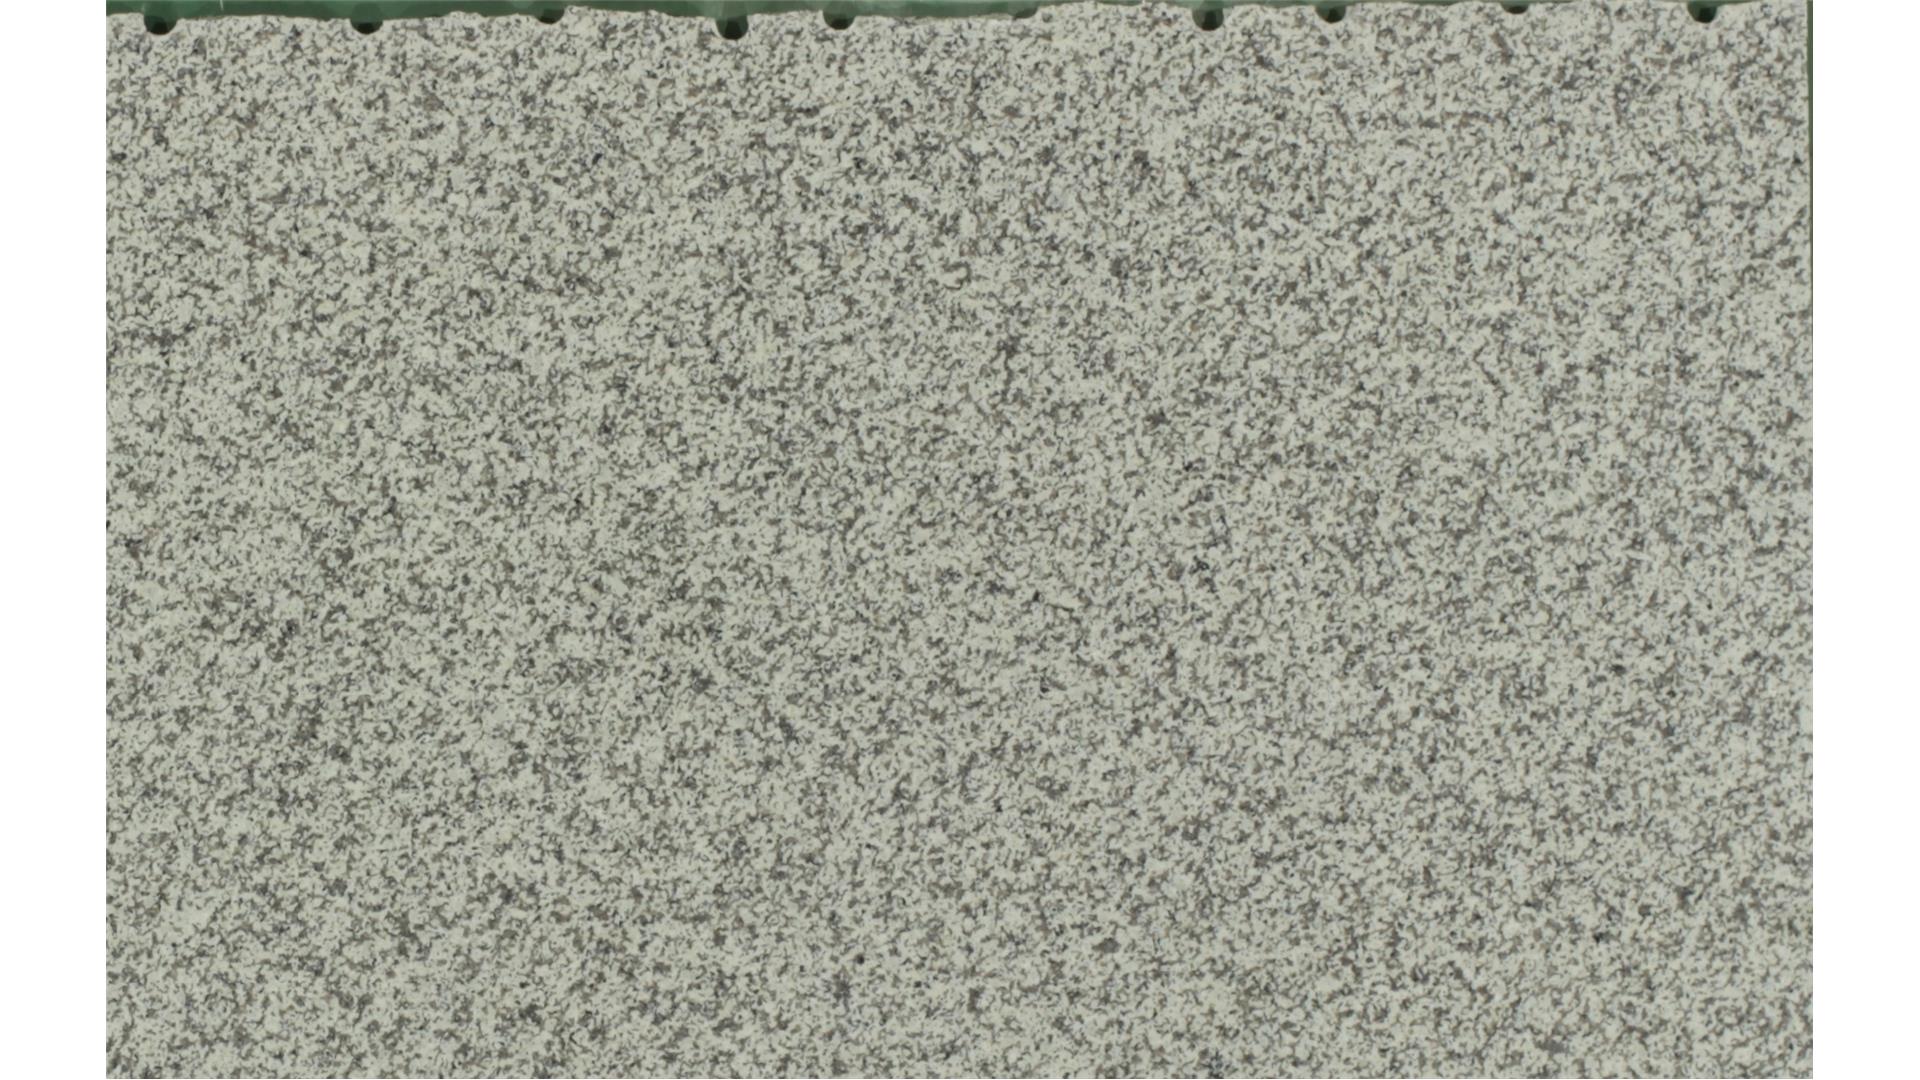 White Sand 3 cm Granite Slabs